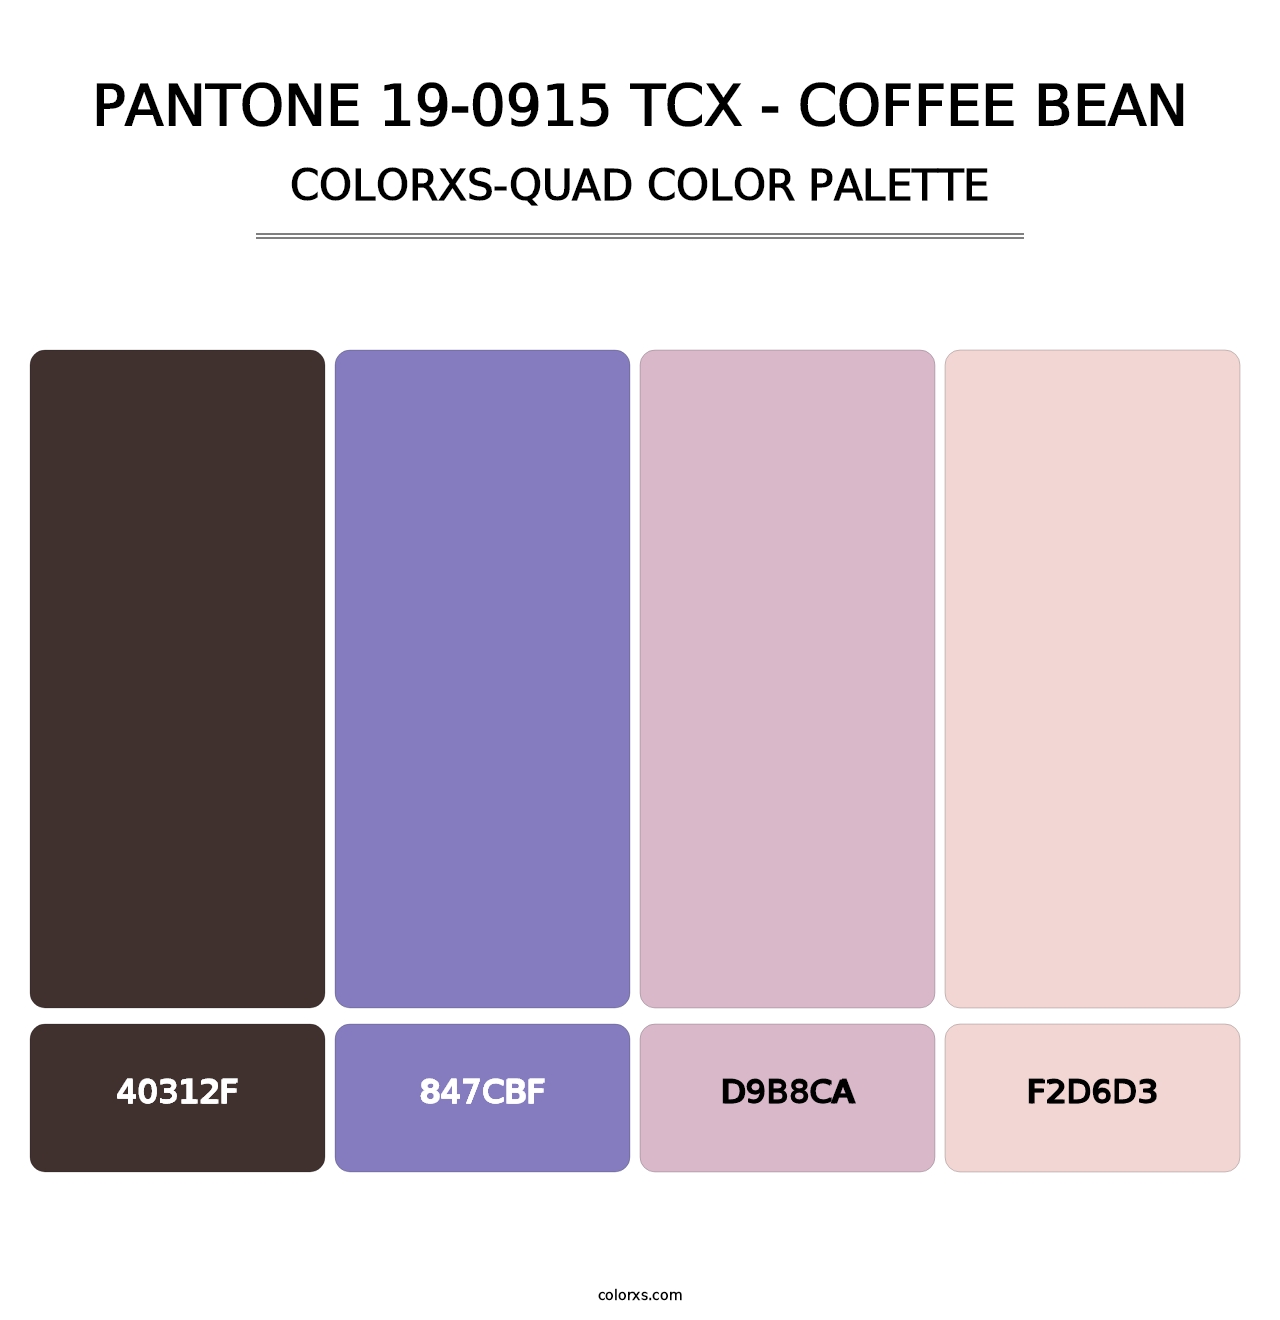 PANTONE 19-0915 TCX - Coffee Bean - Colorxs Quad Palette